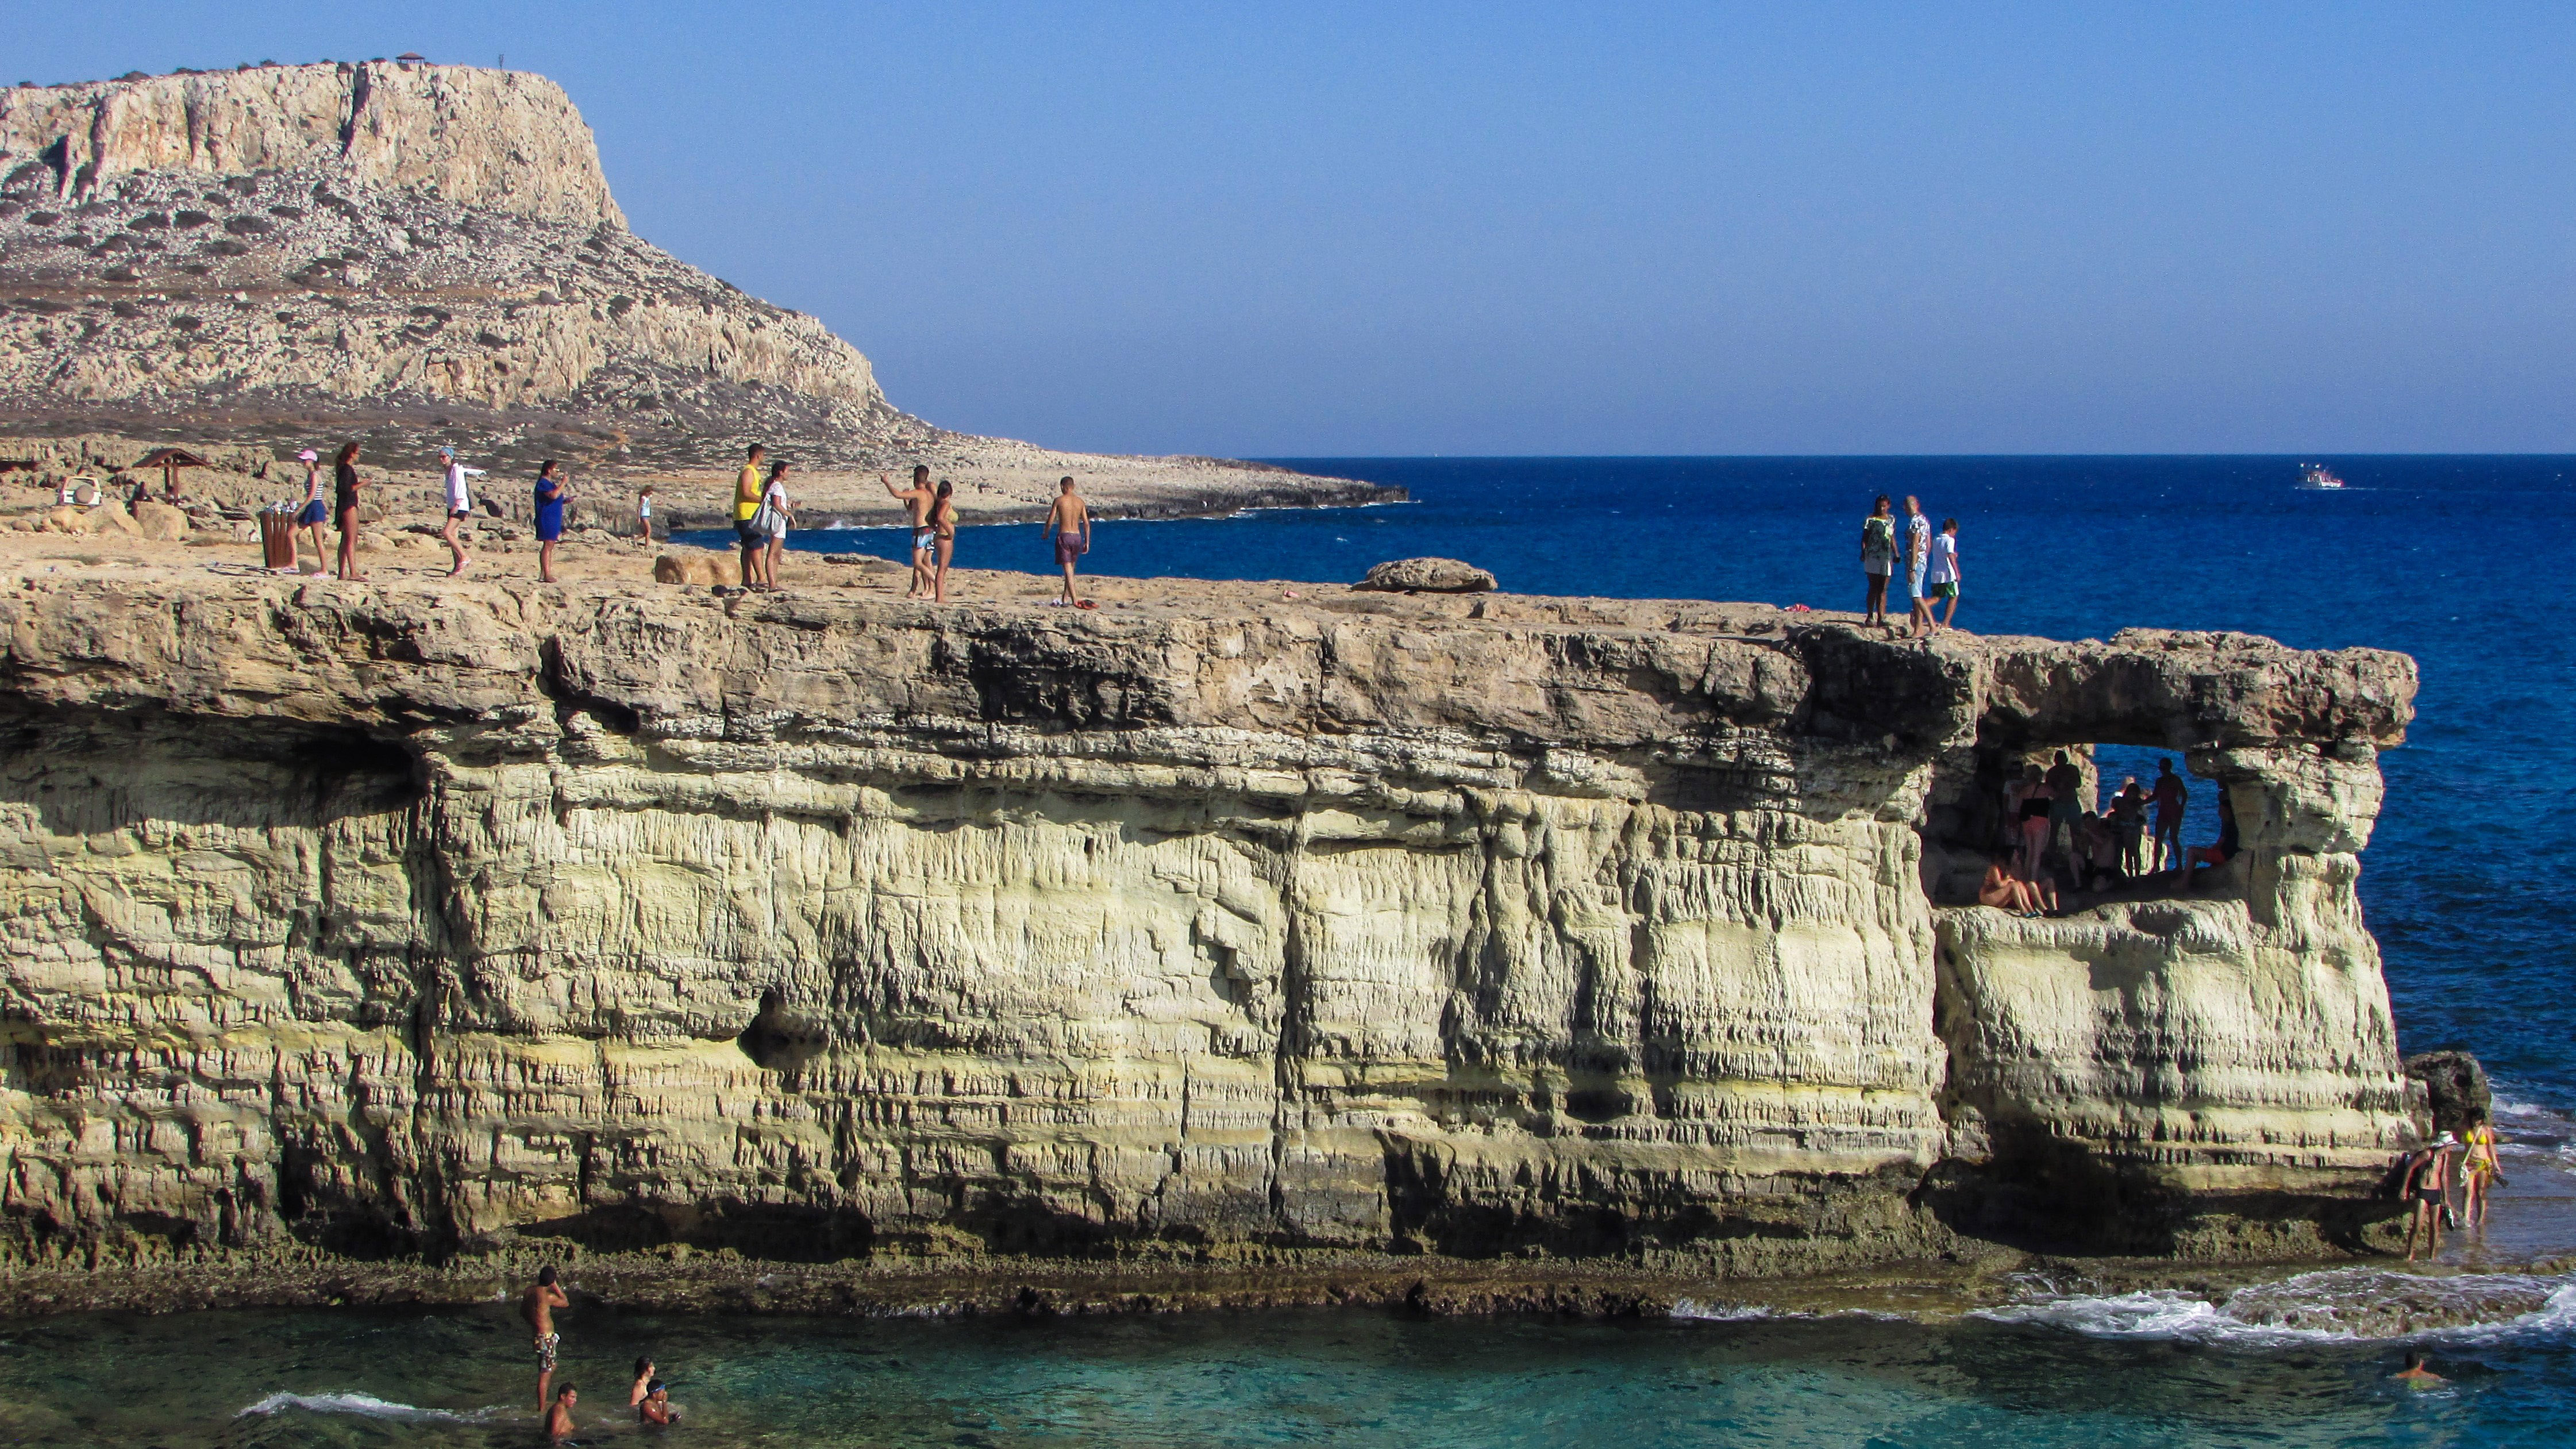 Landscape of rock cliff in Cavo Greko National Park, Cyprus image - Free stock photo - Public Domain photo - CC0 Images